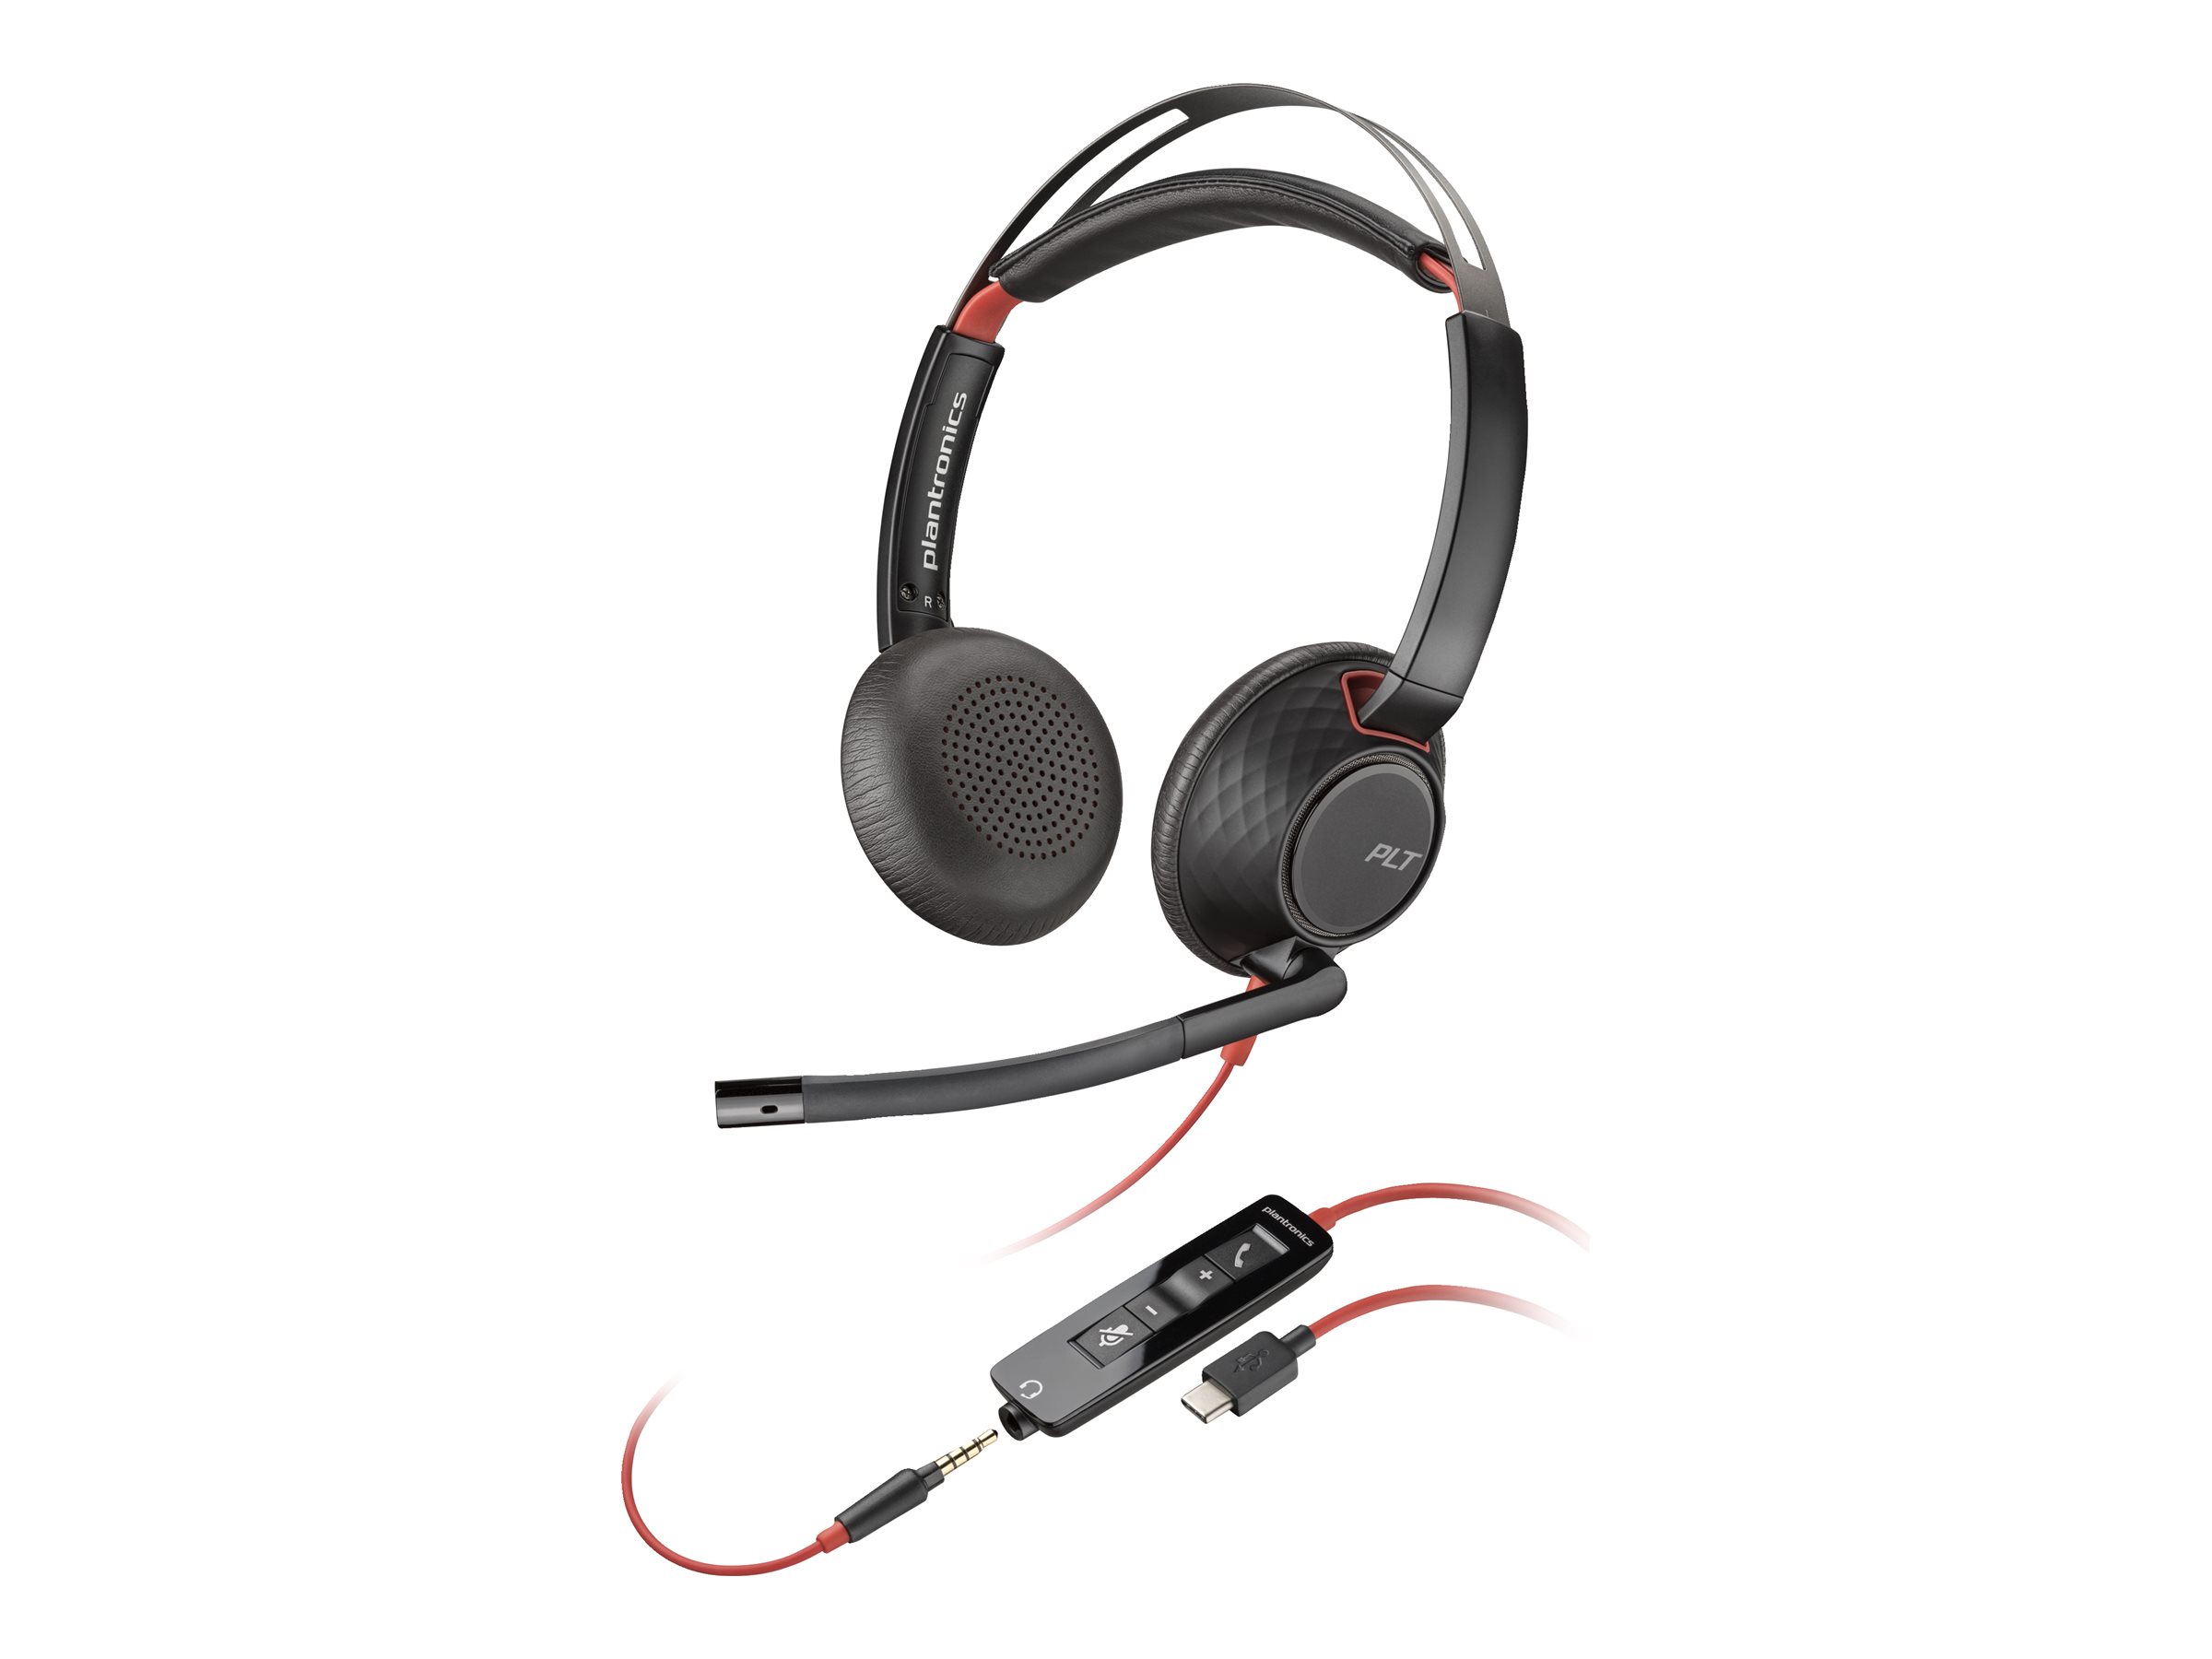 Poly Blackwire 5220 - Headset - On-Ear - kabelgebunden - 3,5 mm Stecker, USB-C - Schwarz